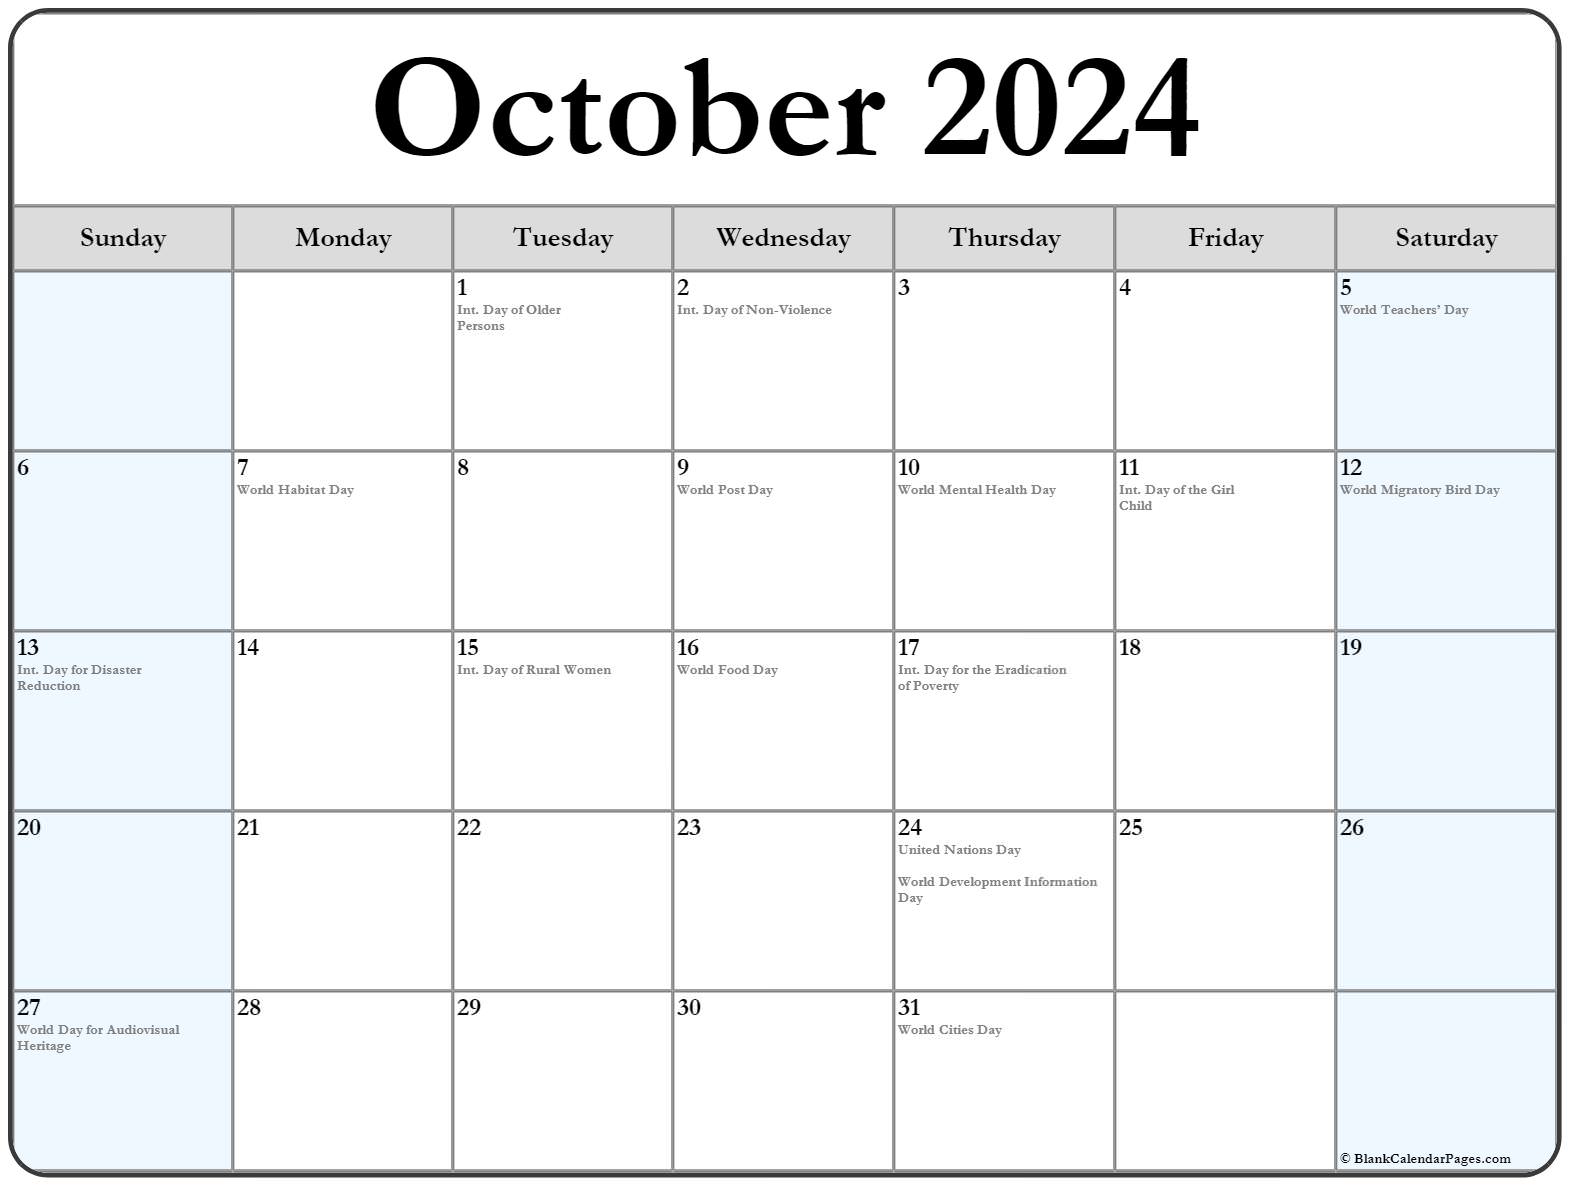 October 2022 with holidays calendar